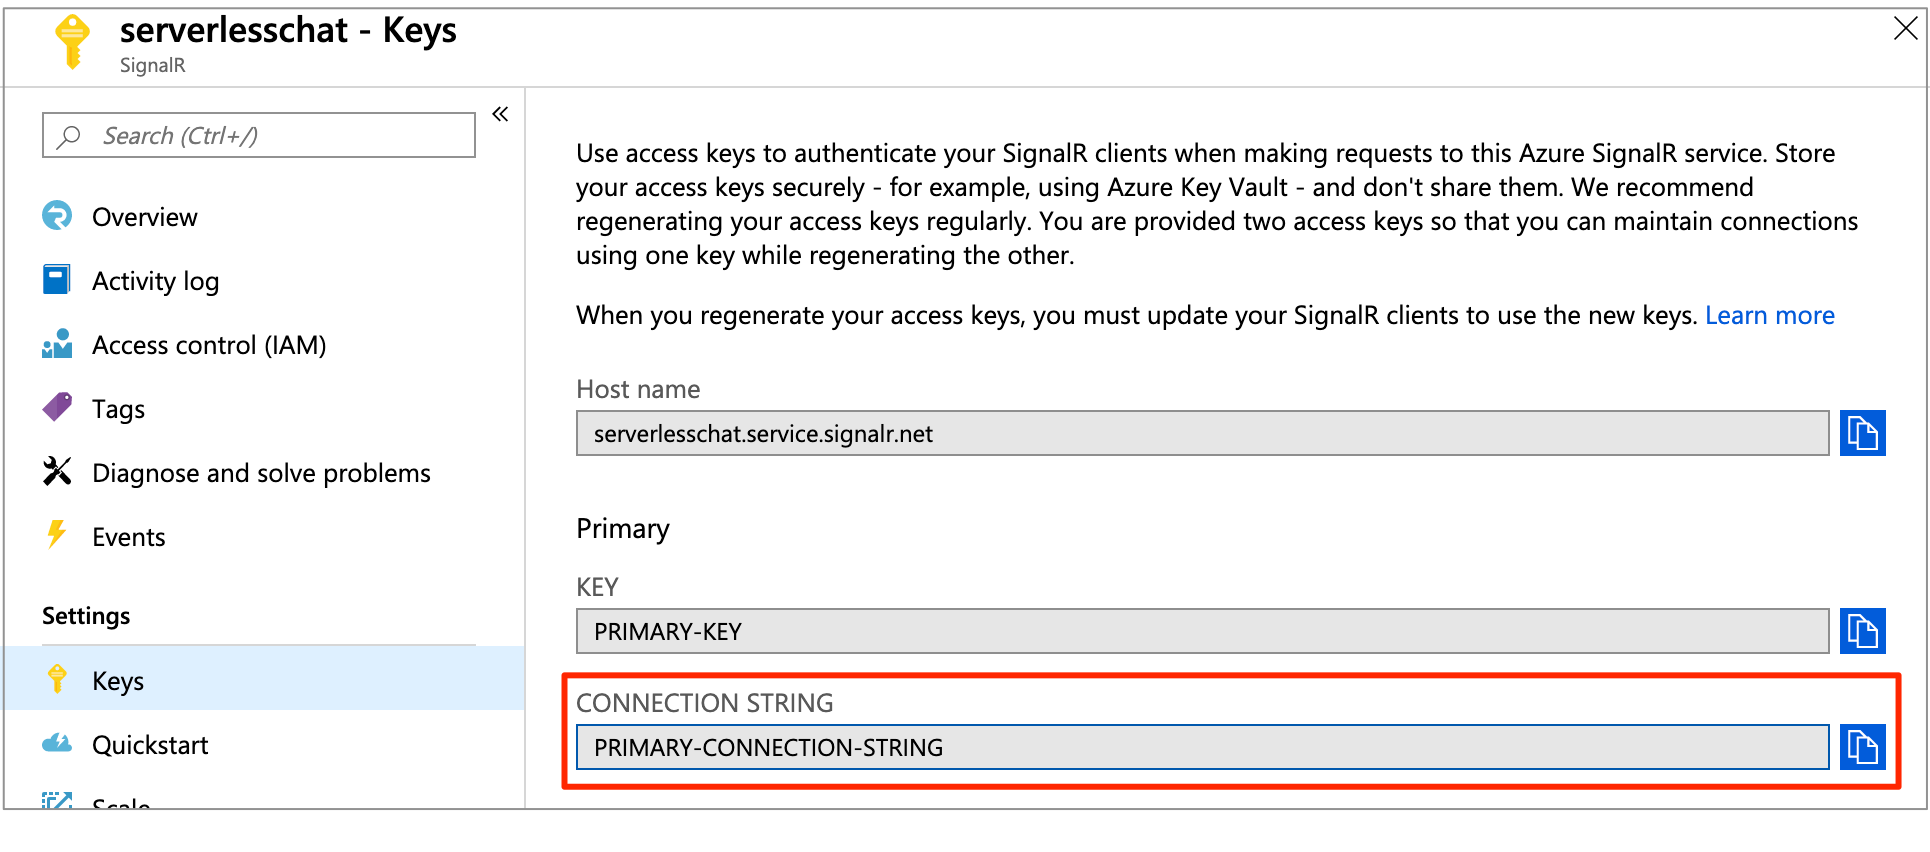 Screenshot of Azure SignalR service Keys page.